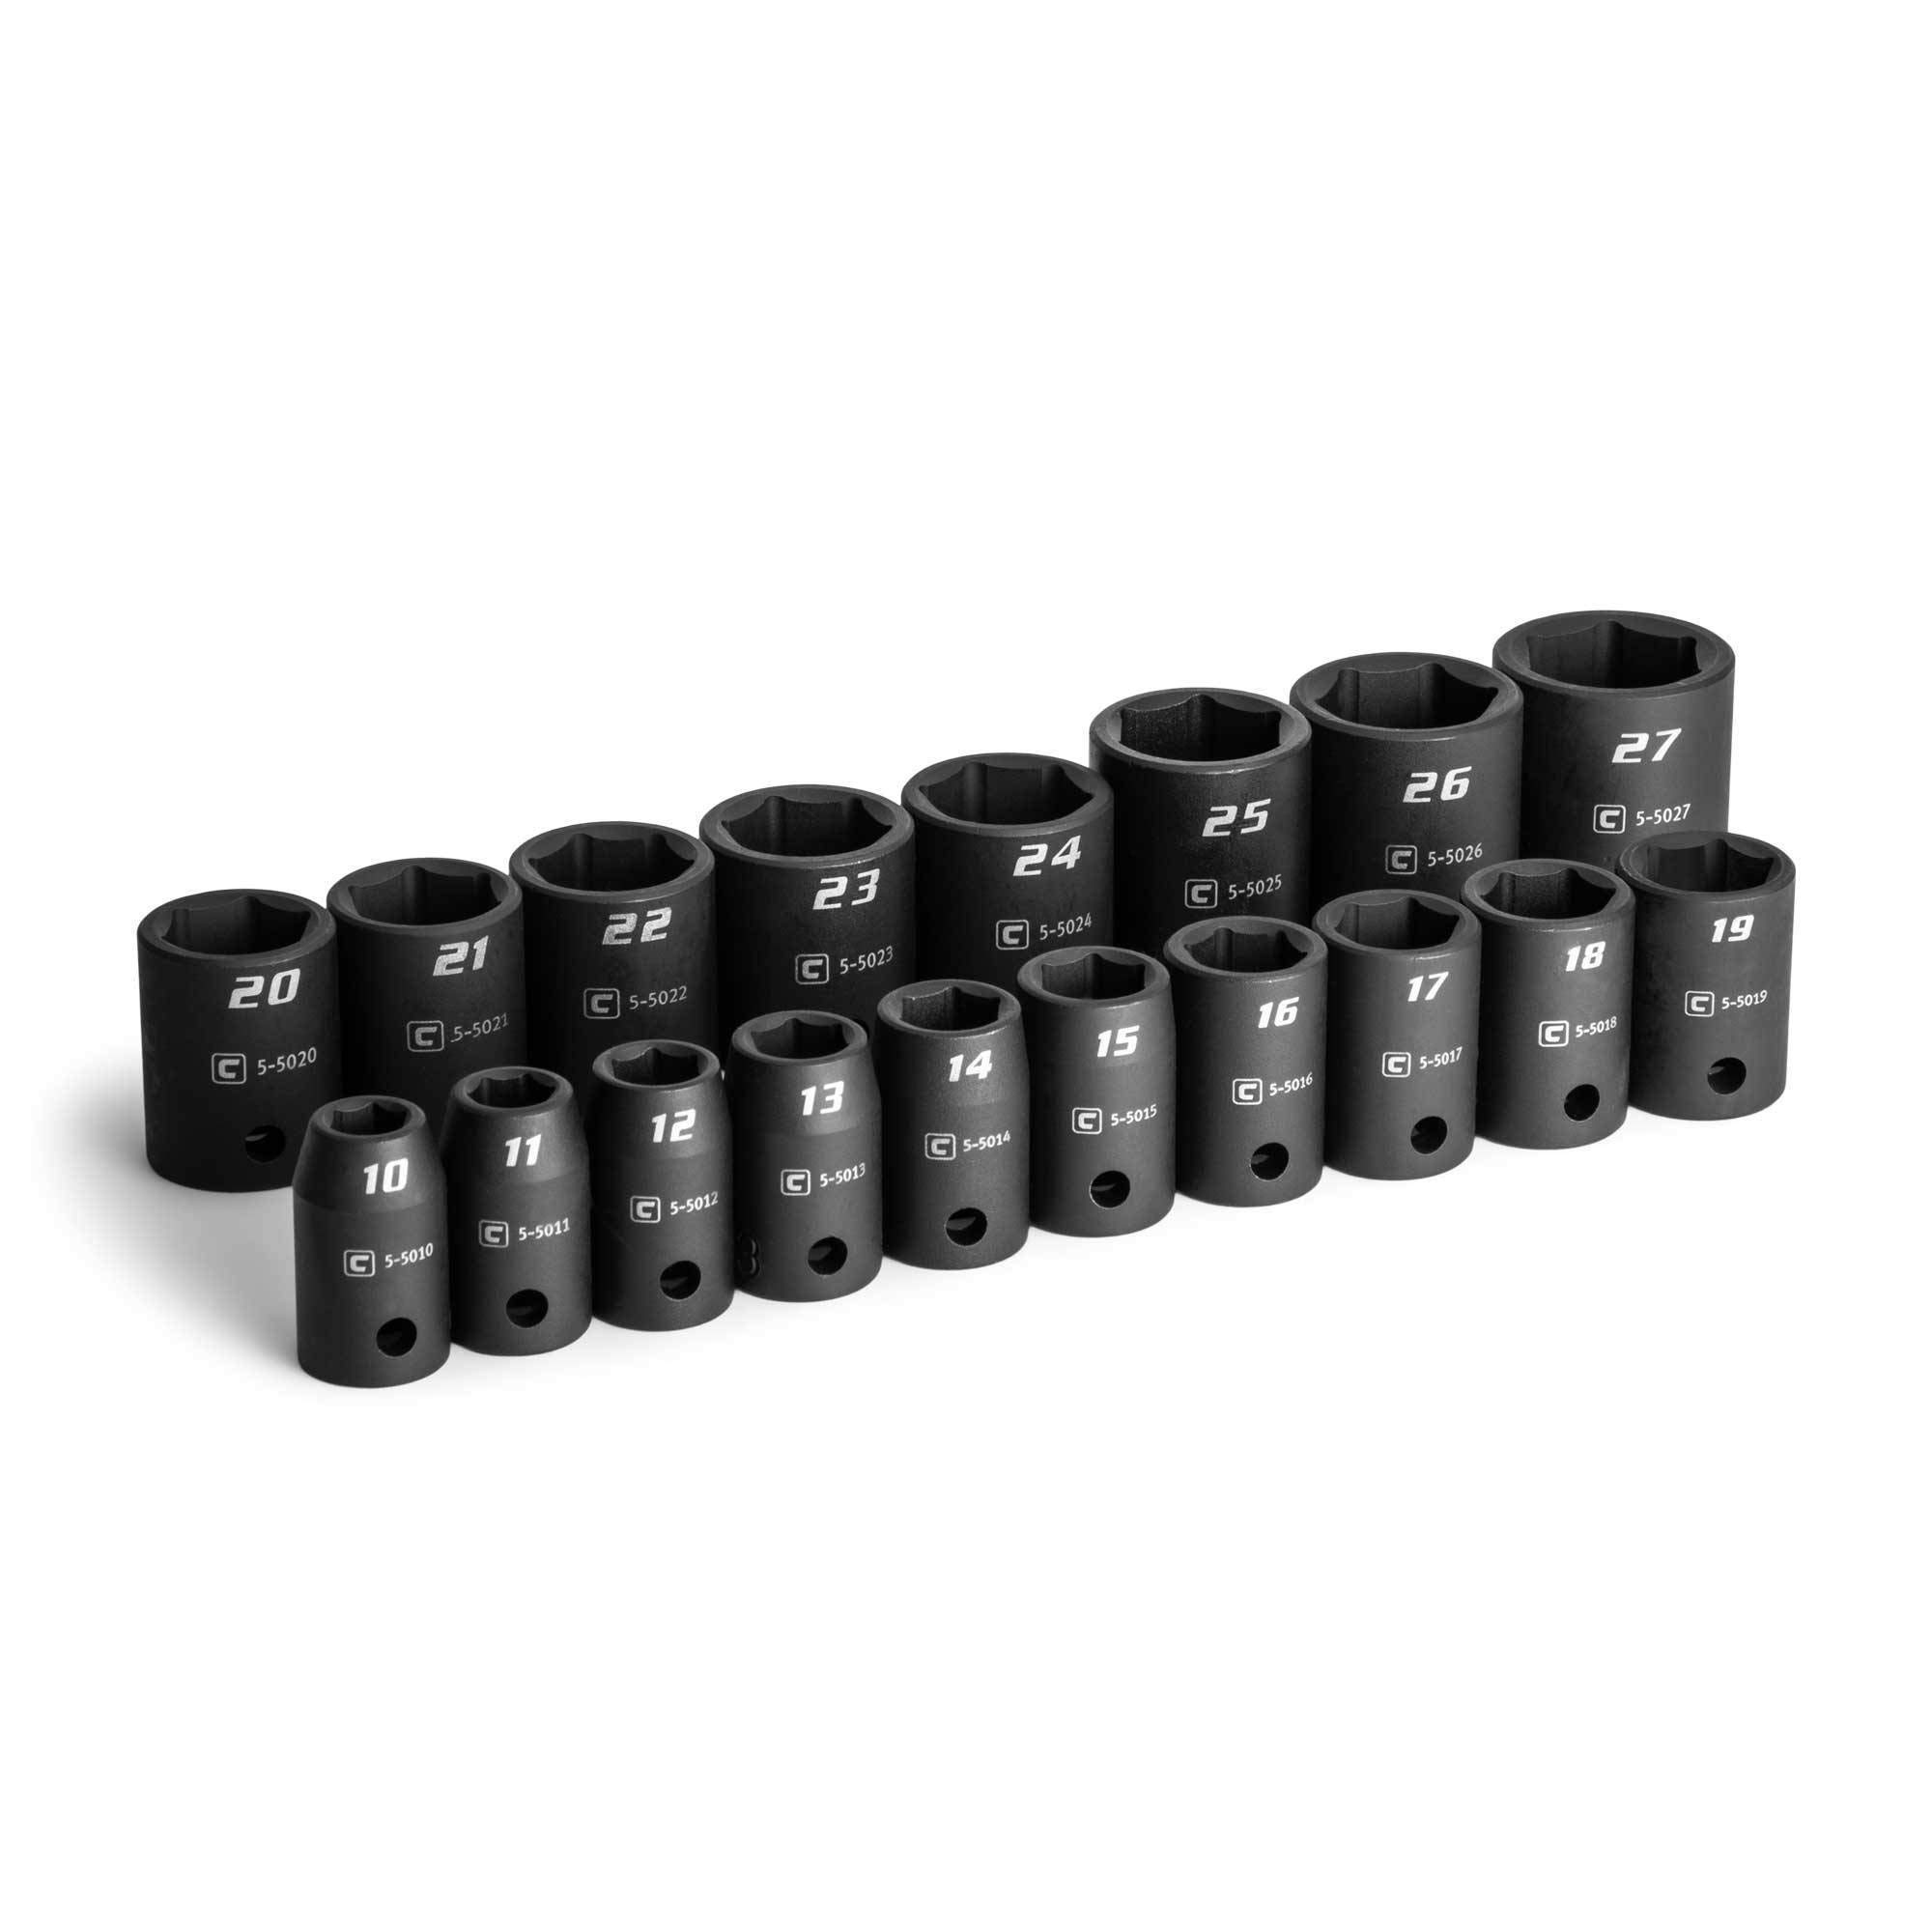 Capri Tools 1/2 in. Drive Shallow Impact Socket Set, 10 to 27 mm, Metric, 18-Piece